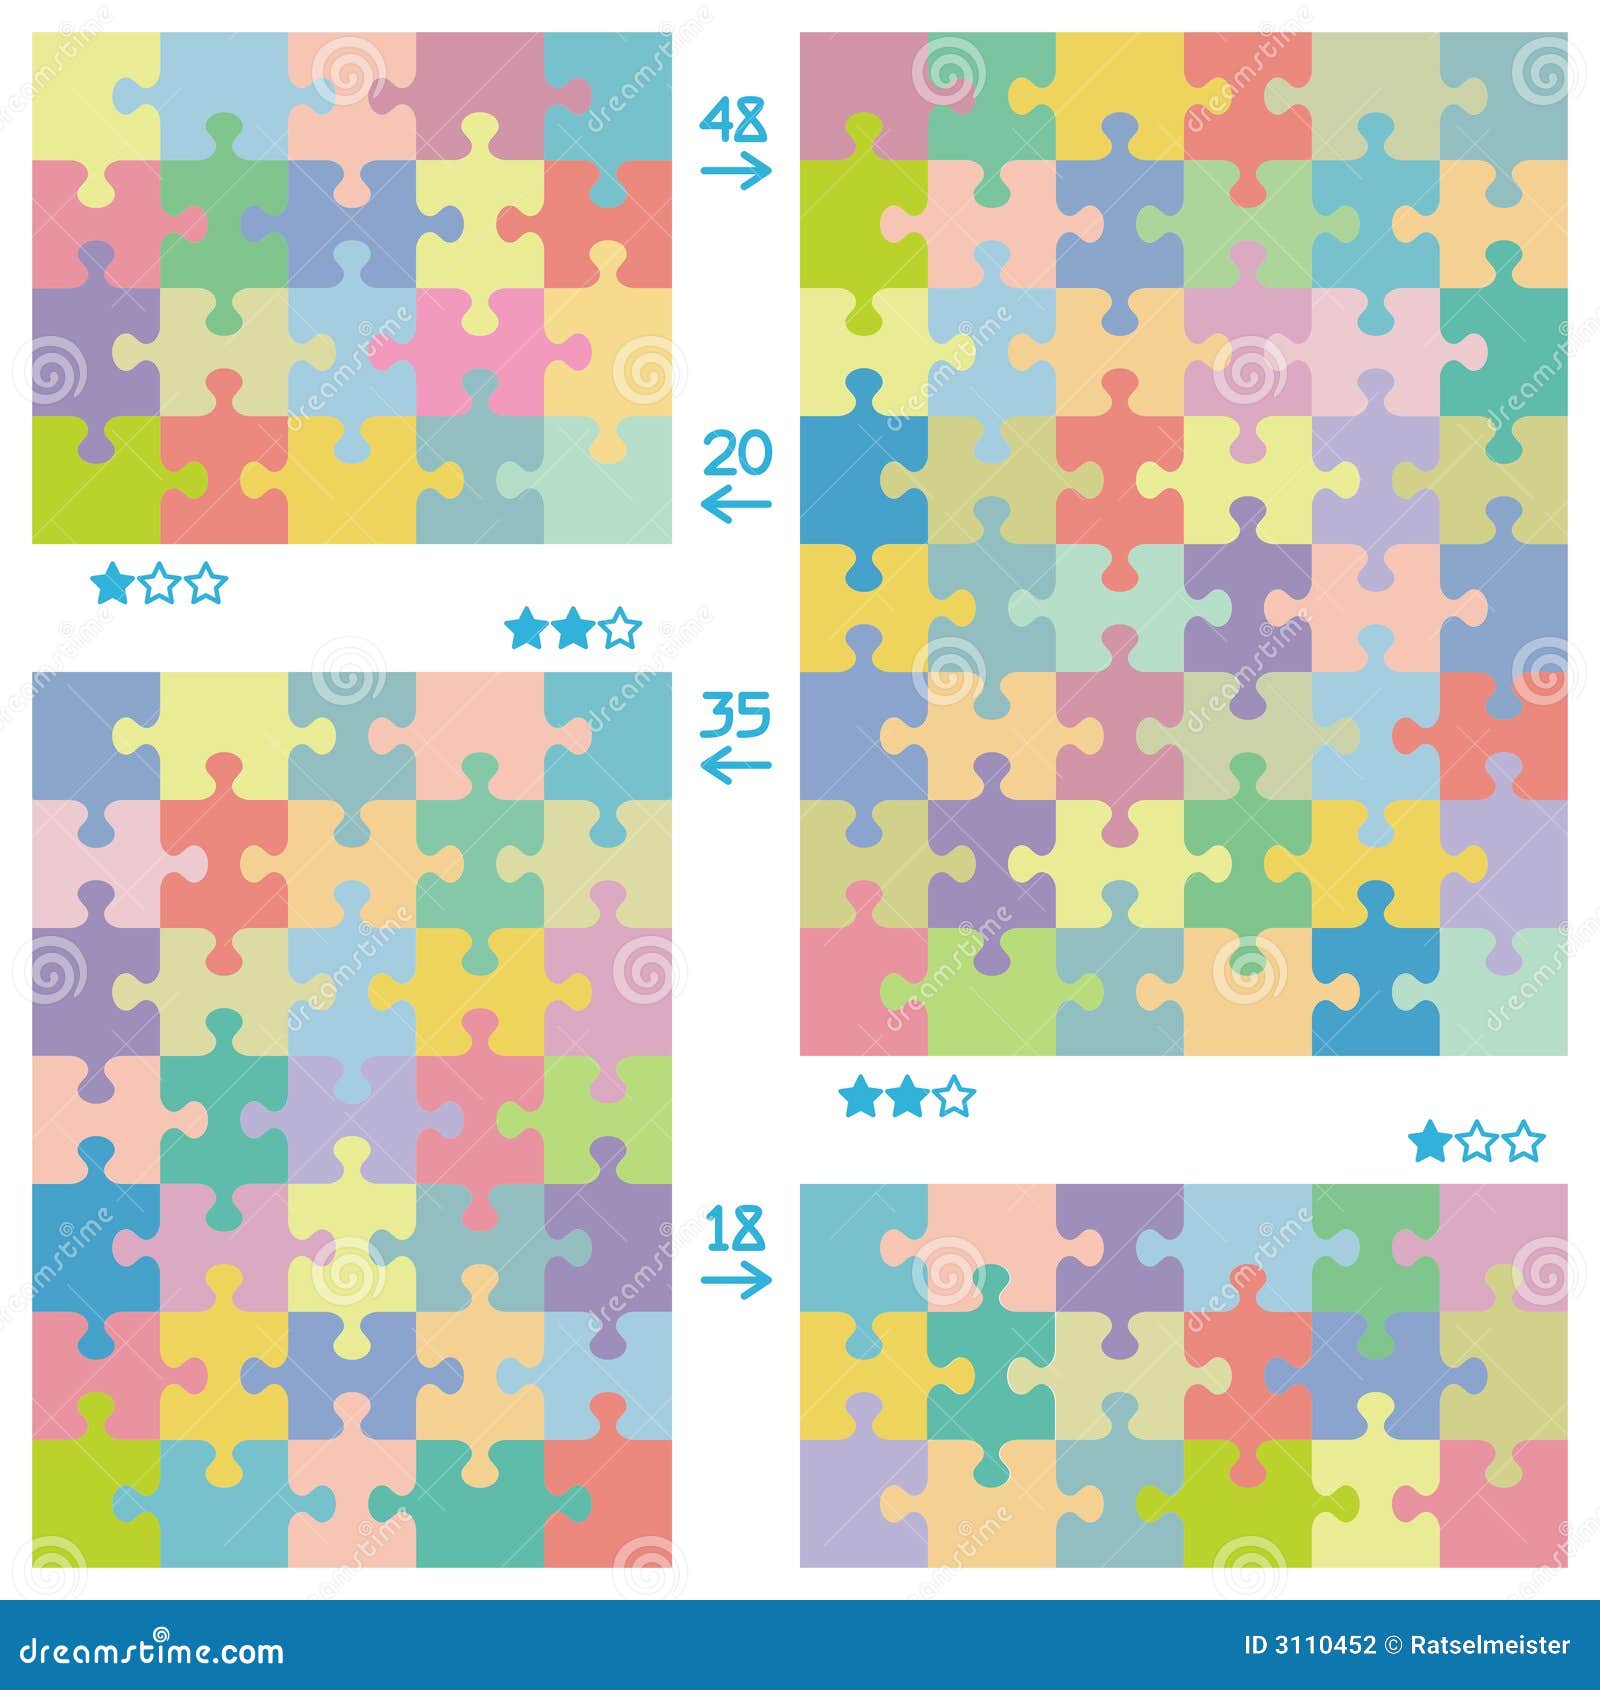 18 piece blank jigsaw puzzle template (3x6)